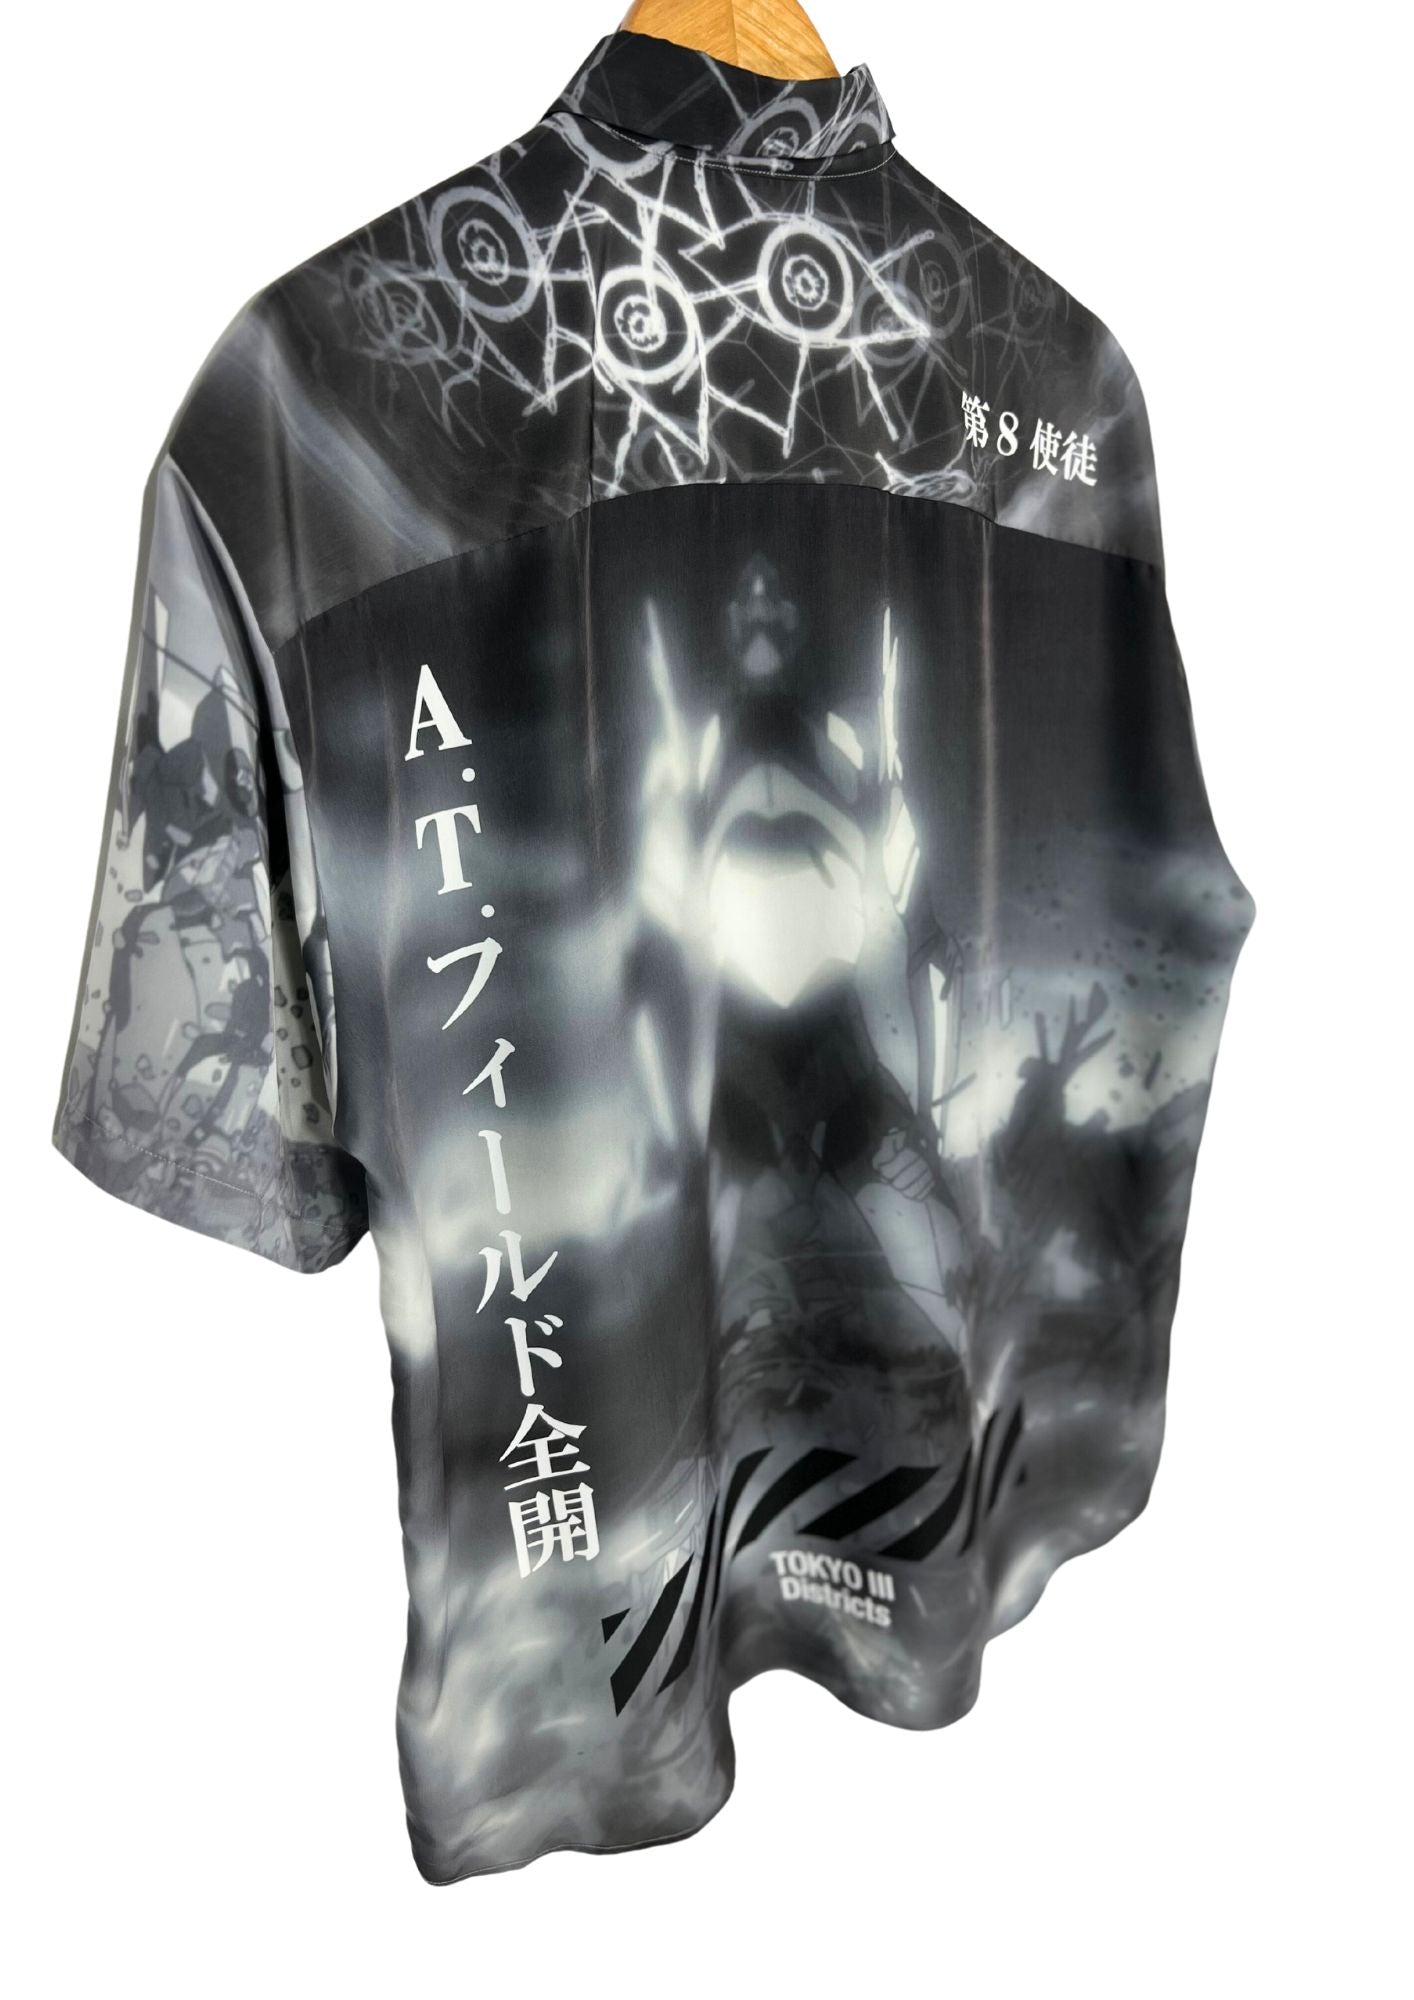 2020 Neon Genesis Evangelion x tk Takeo Kikuchi AT Field Max Button-Up S/S Shirts